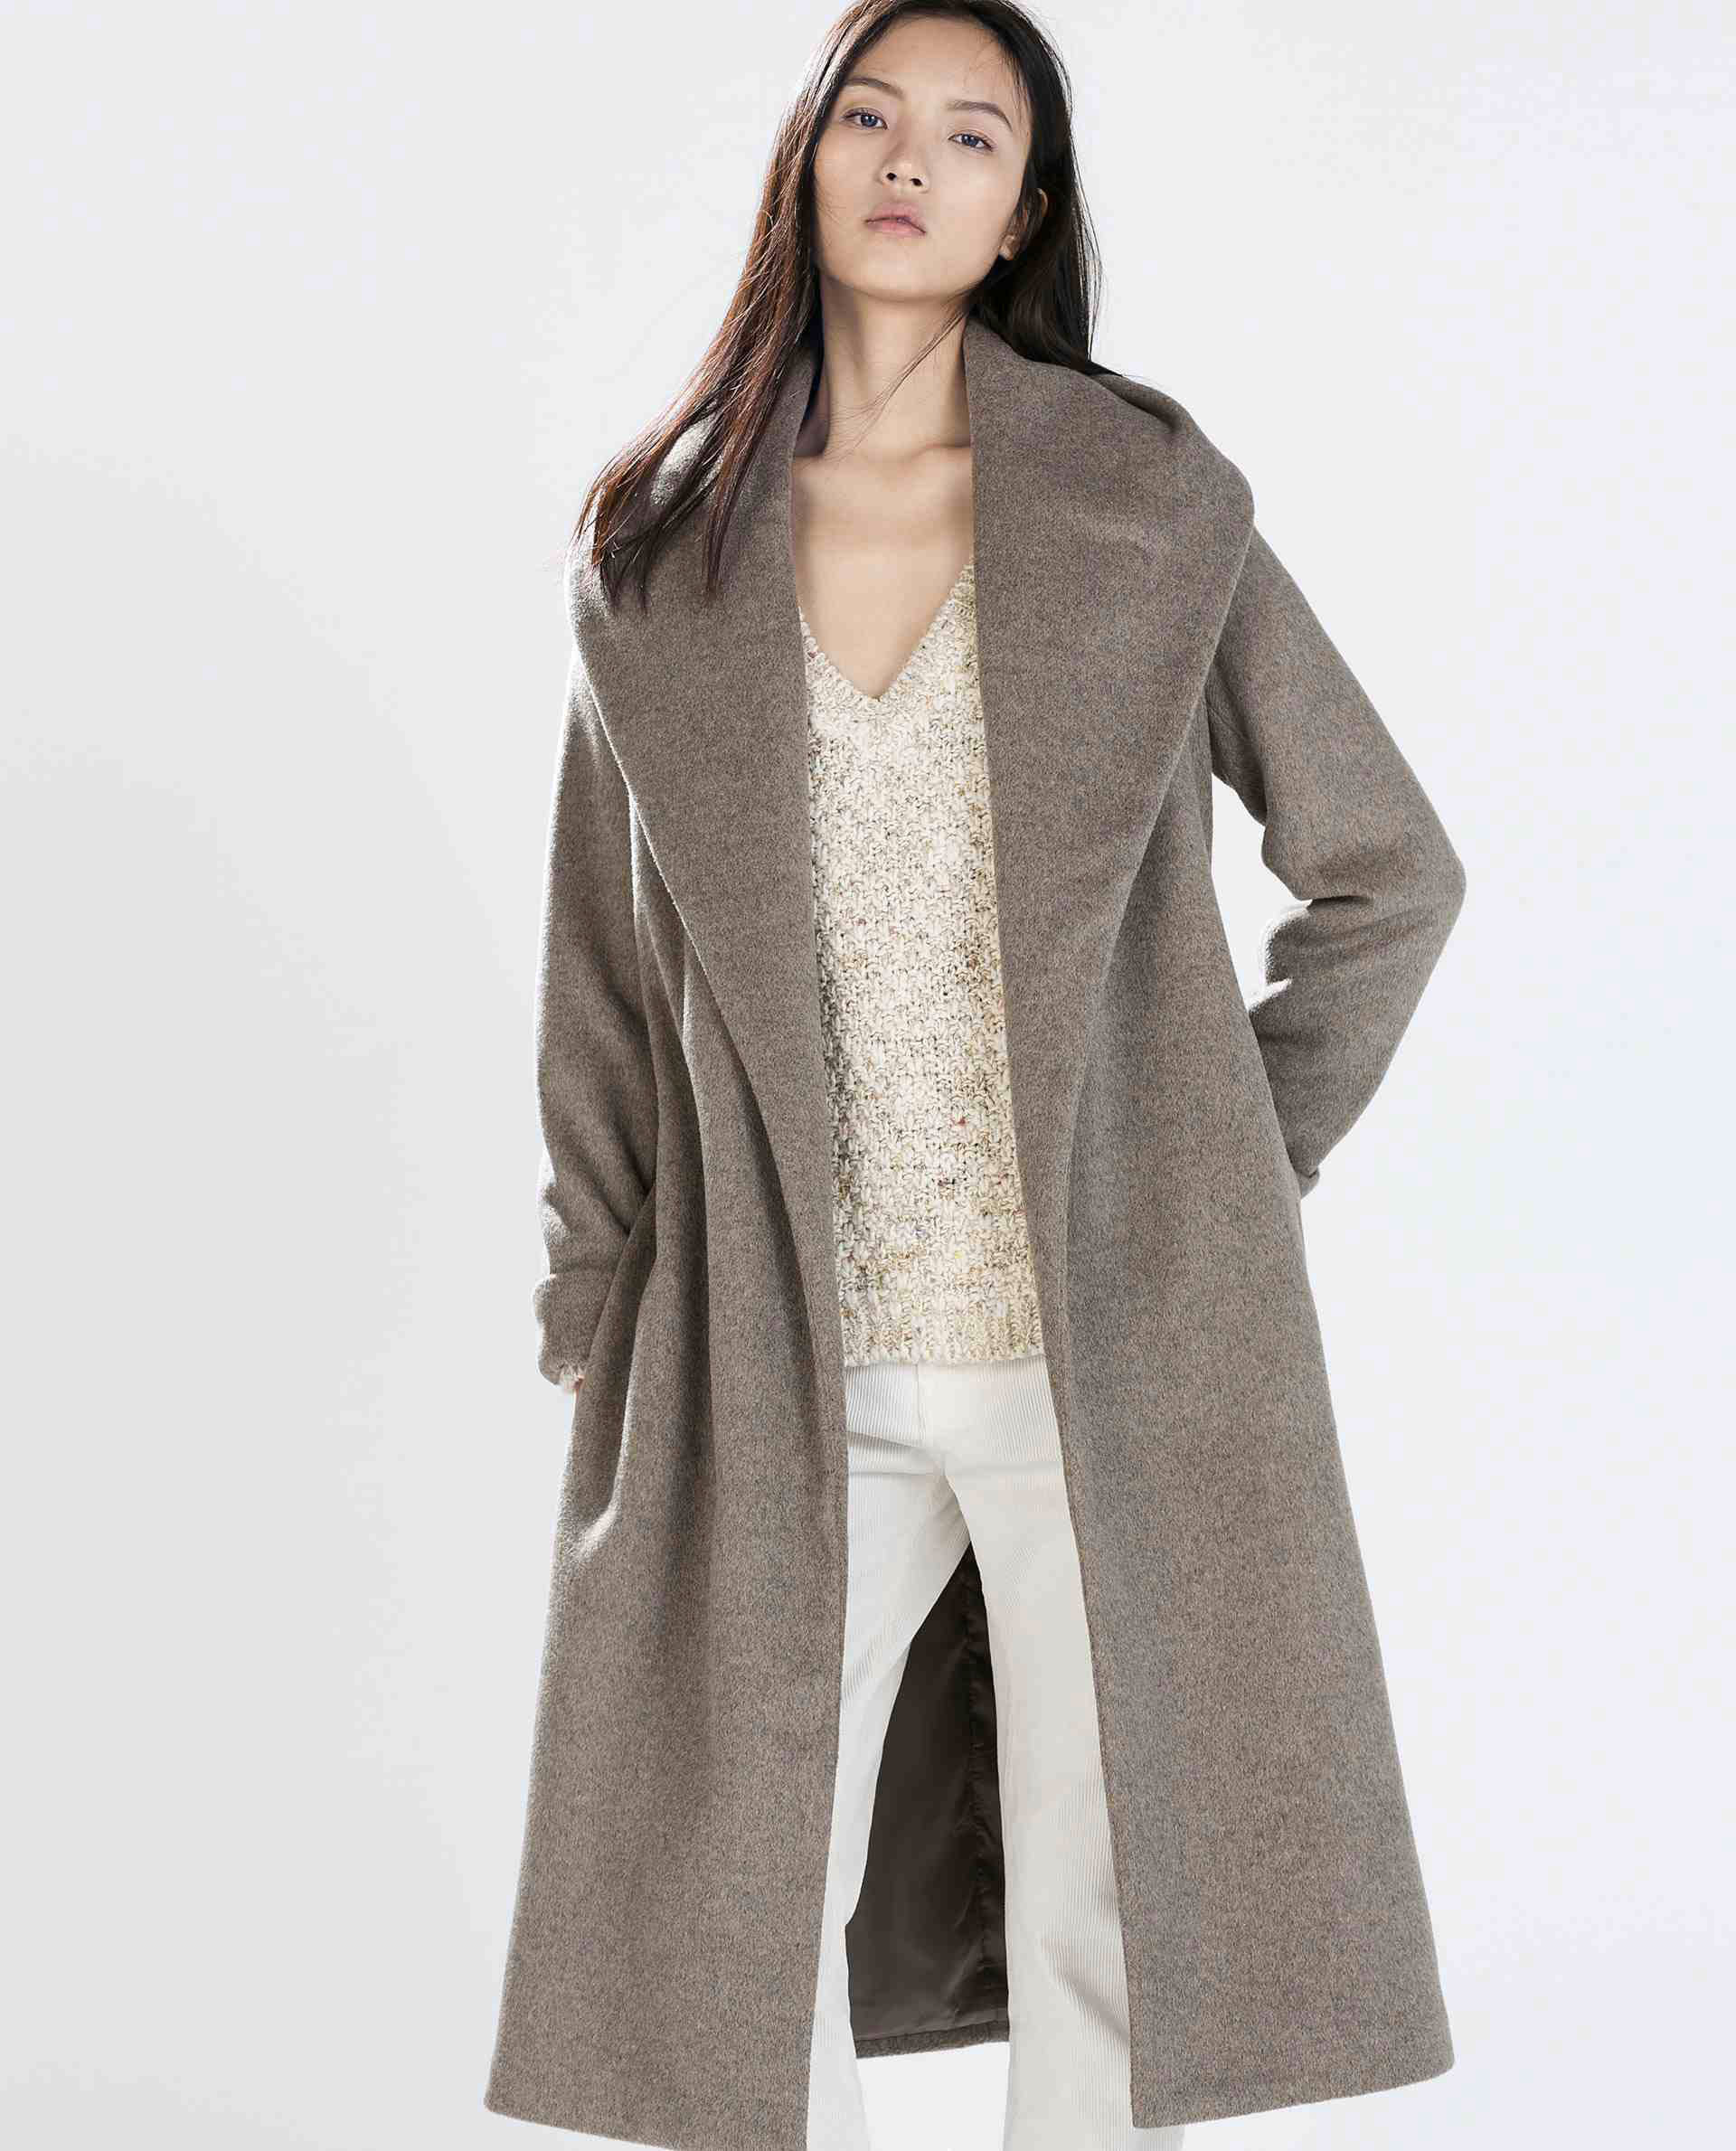 Zara - Manteau (139 €)